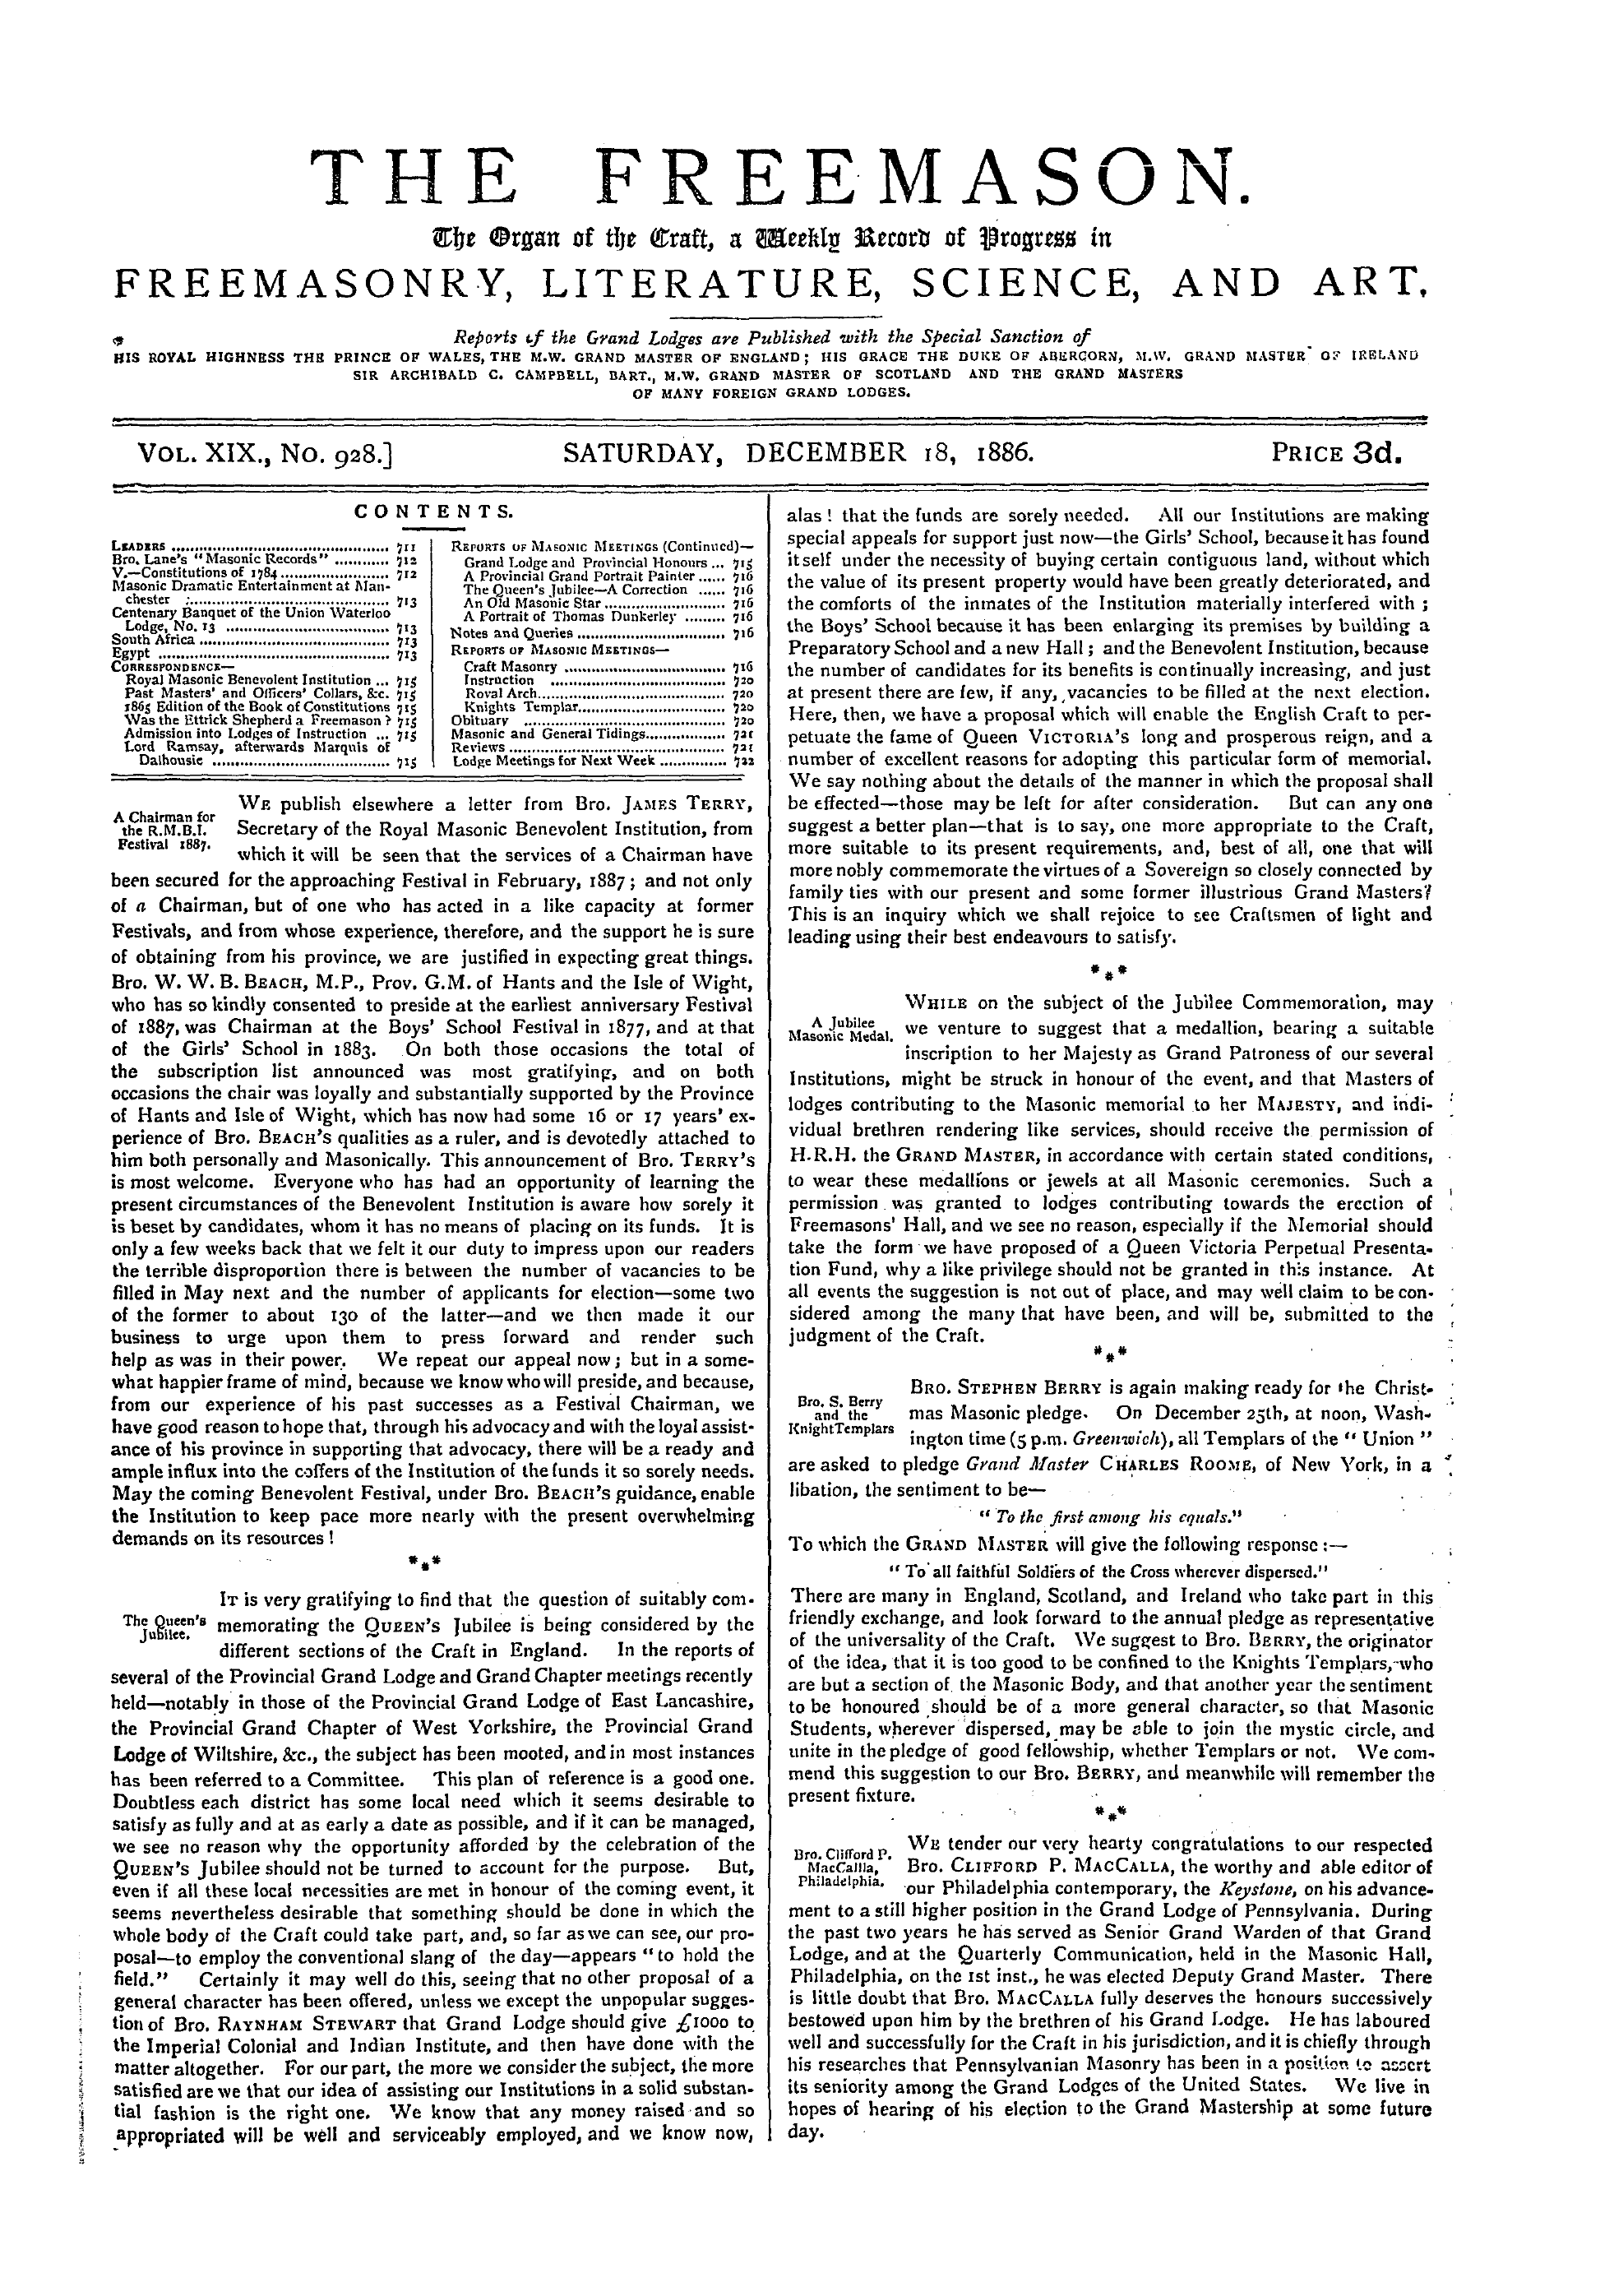 The Freemason: 1886-12-18 - Contents.